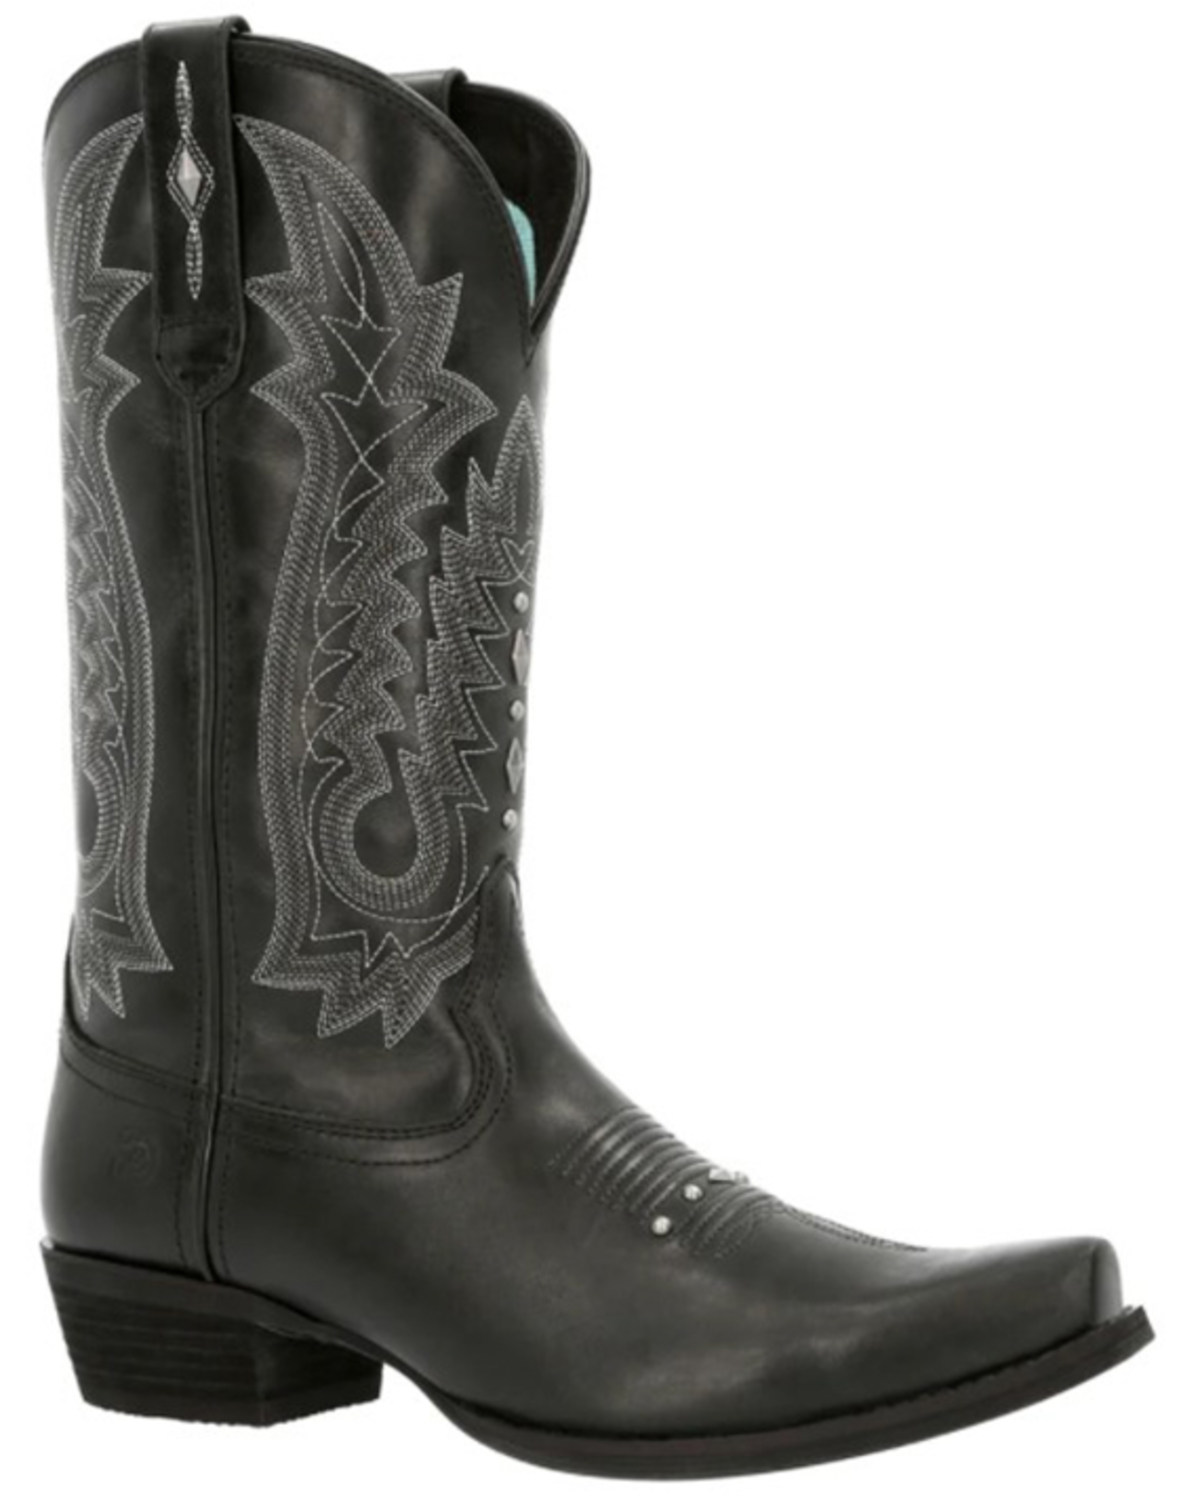 Durango Women's Crush Antique Studded Western Boots - Snip Toe